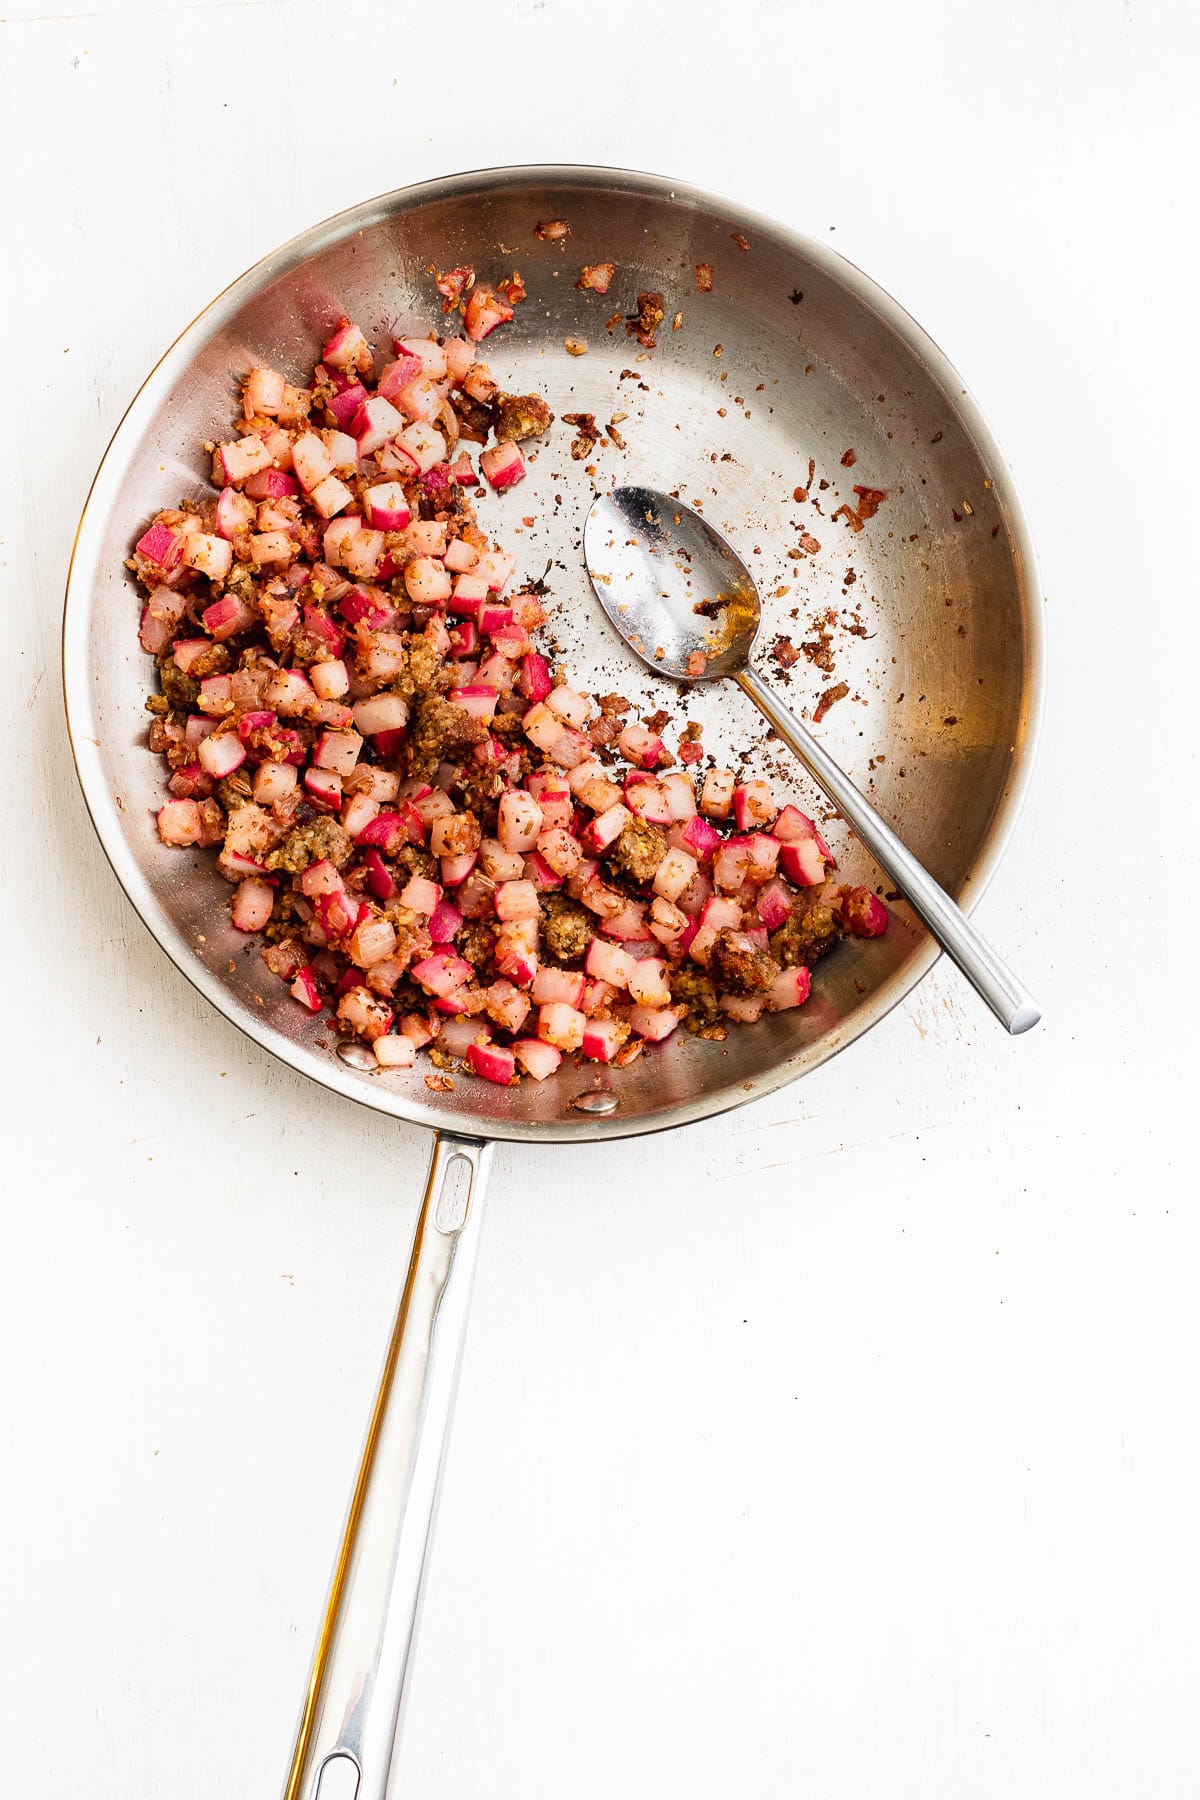 radish hash browns in a pan